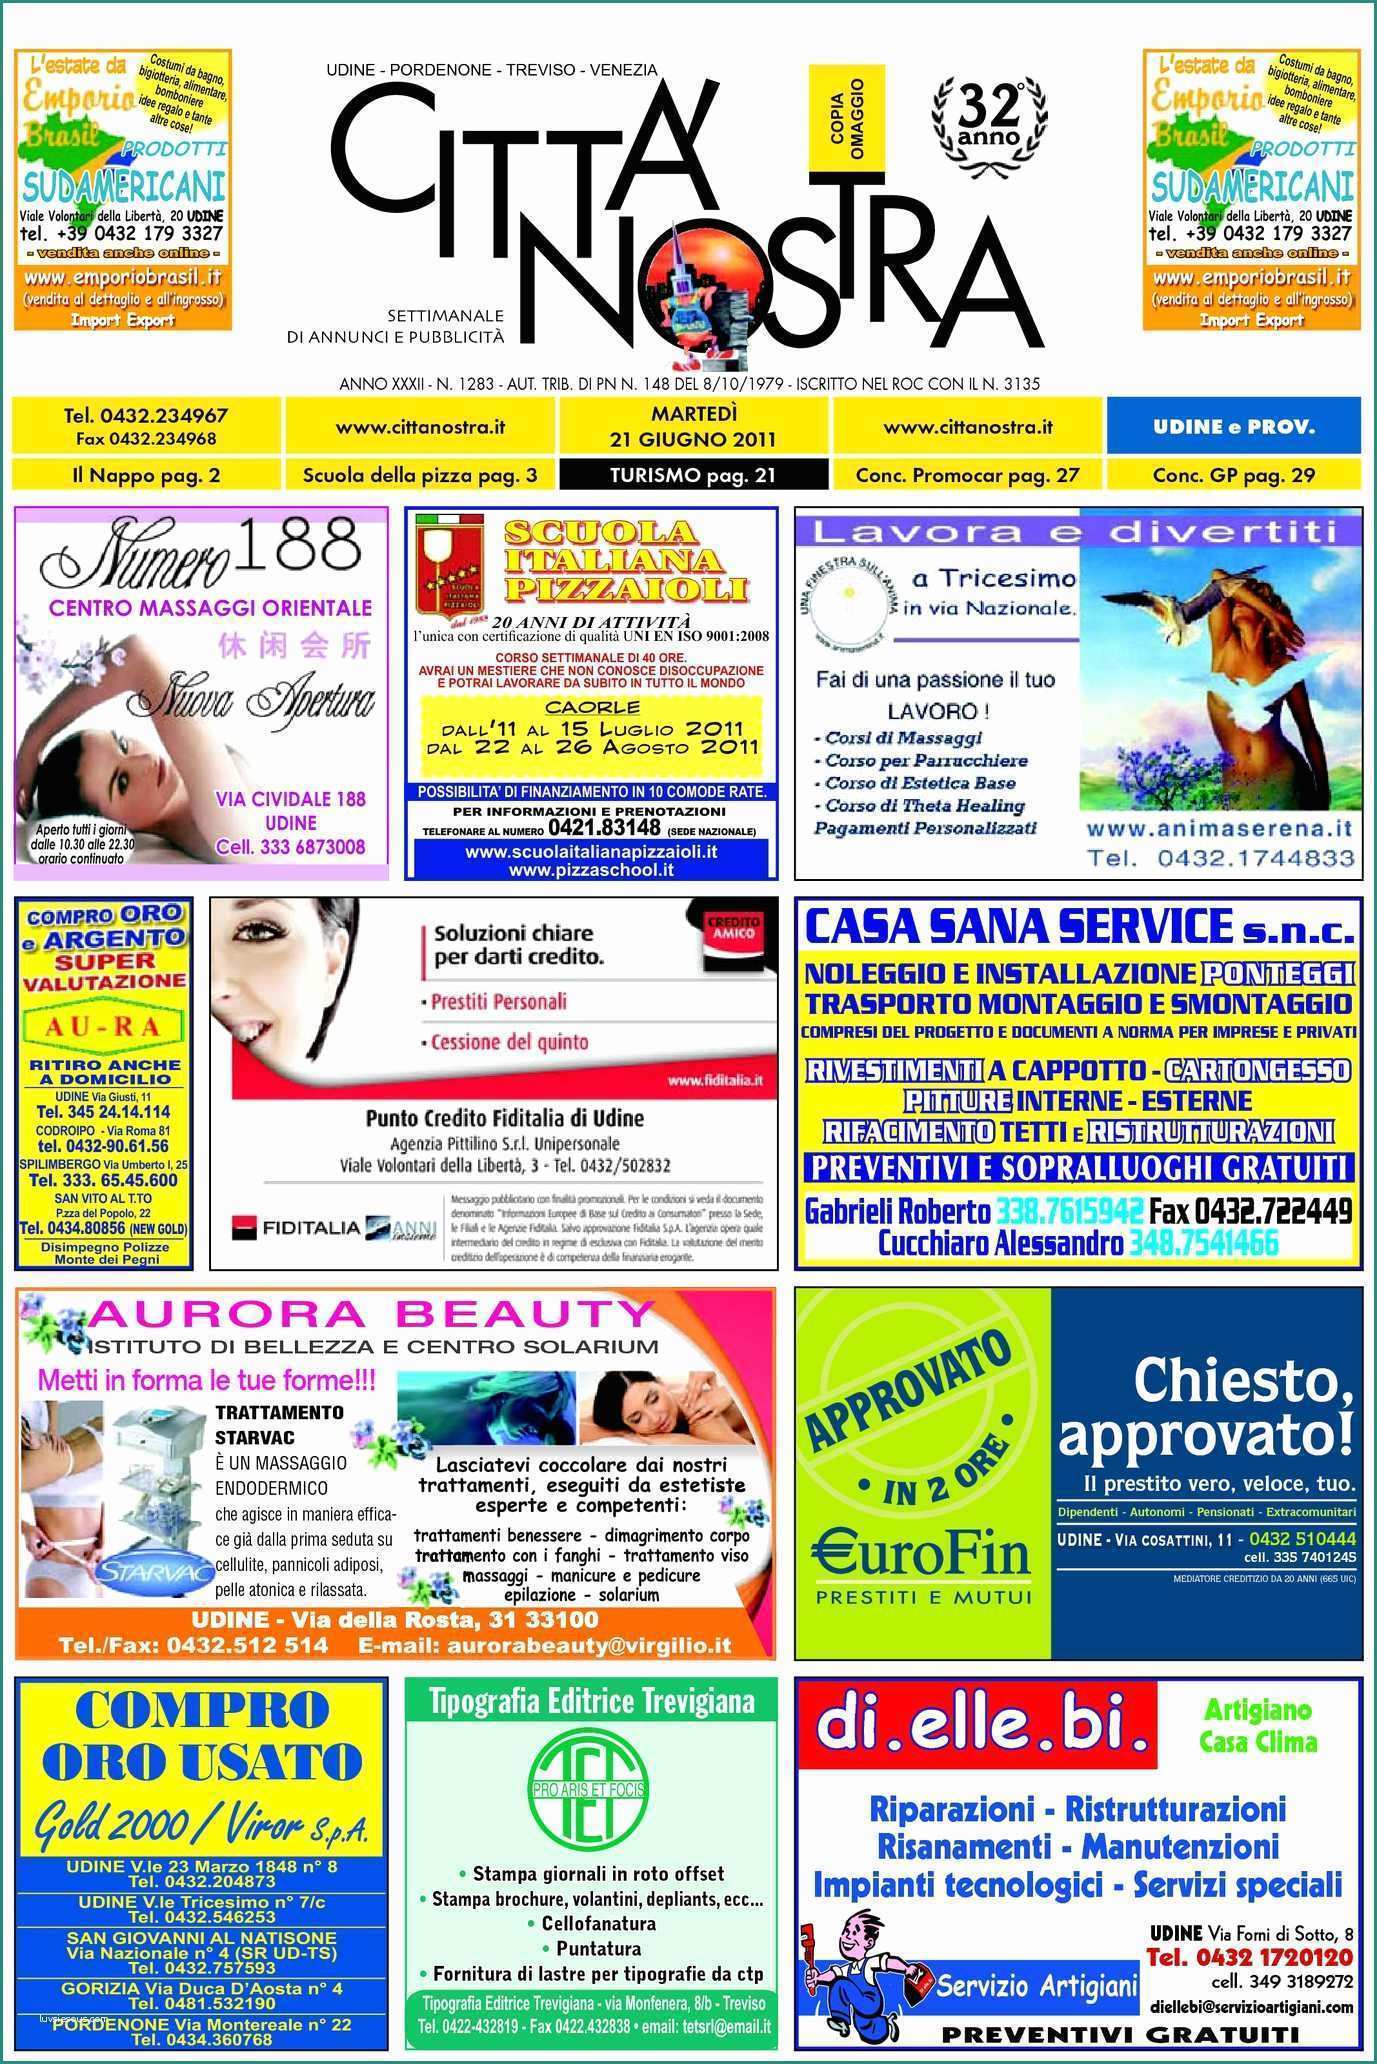 Divano Posti E Calaméo Citt  Nostra Udine Del 21 06 2011 N 1283